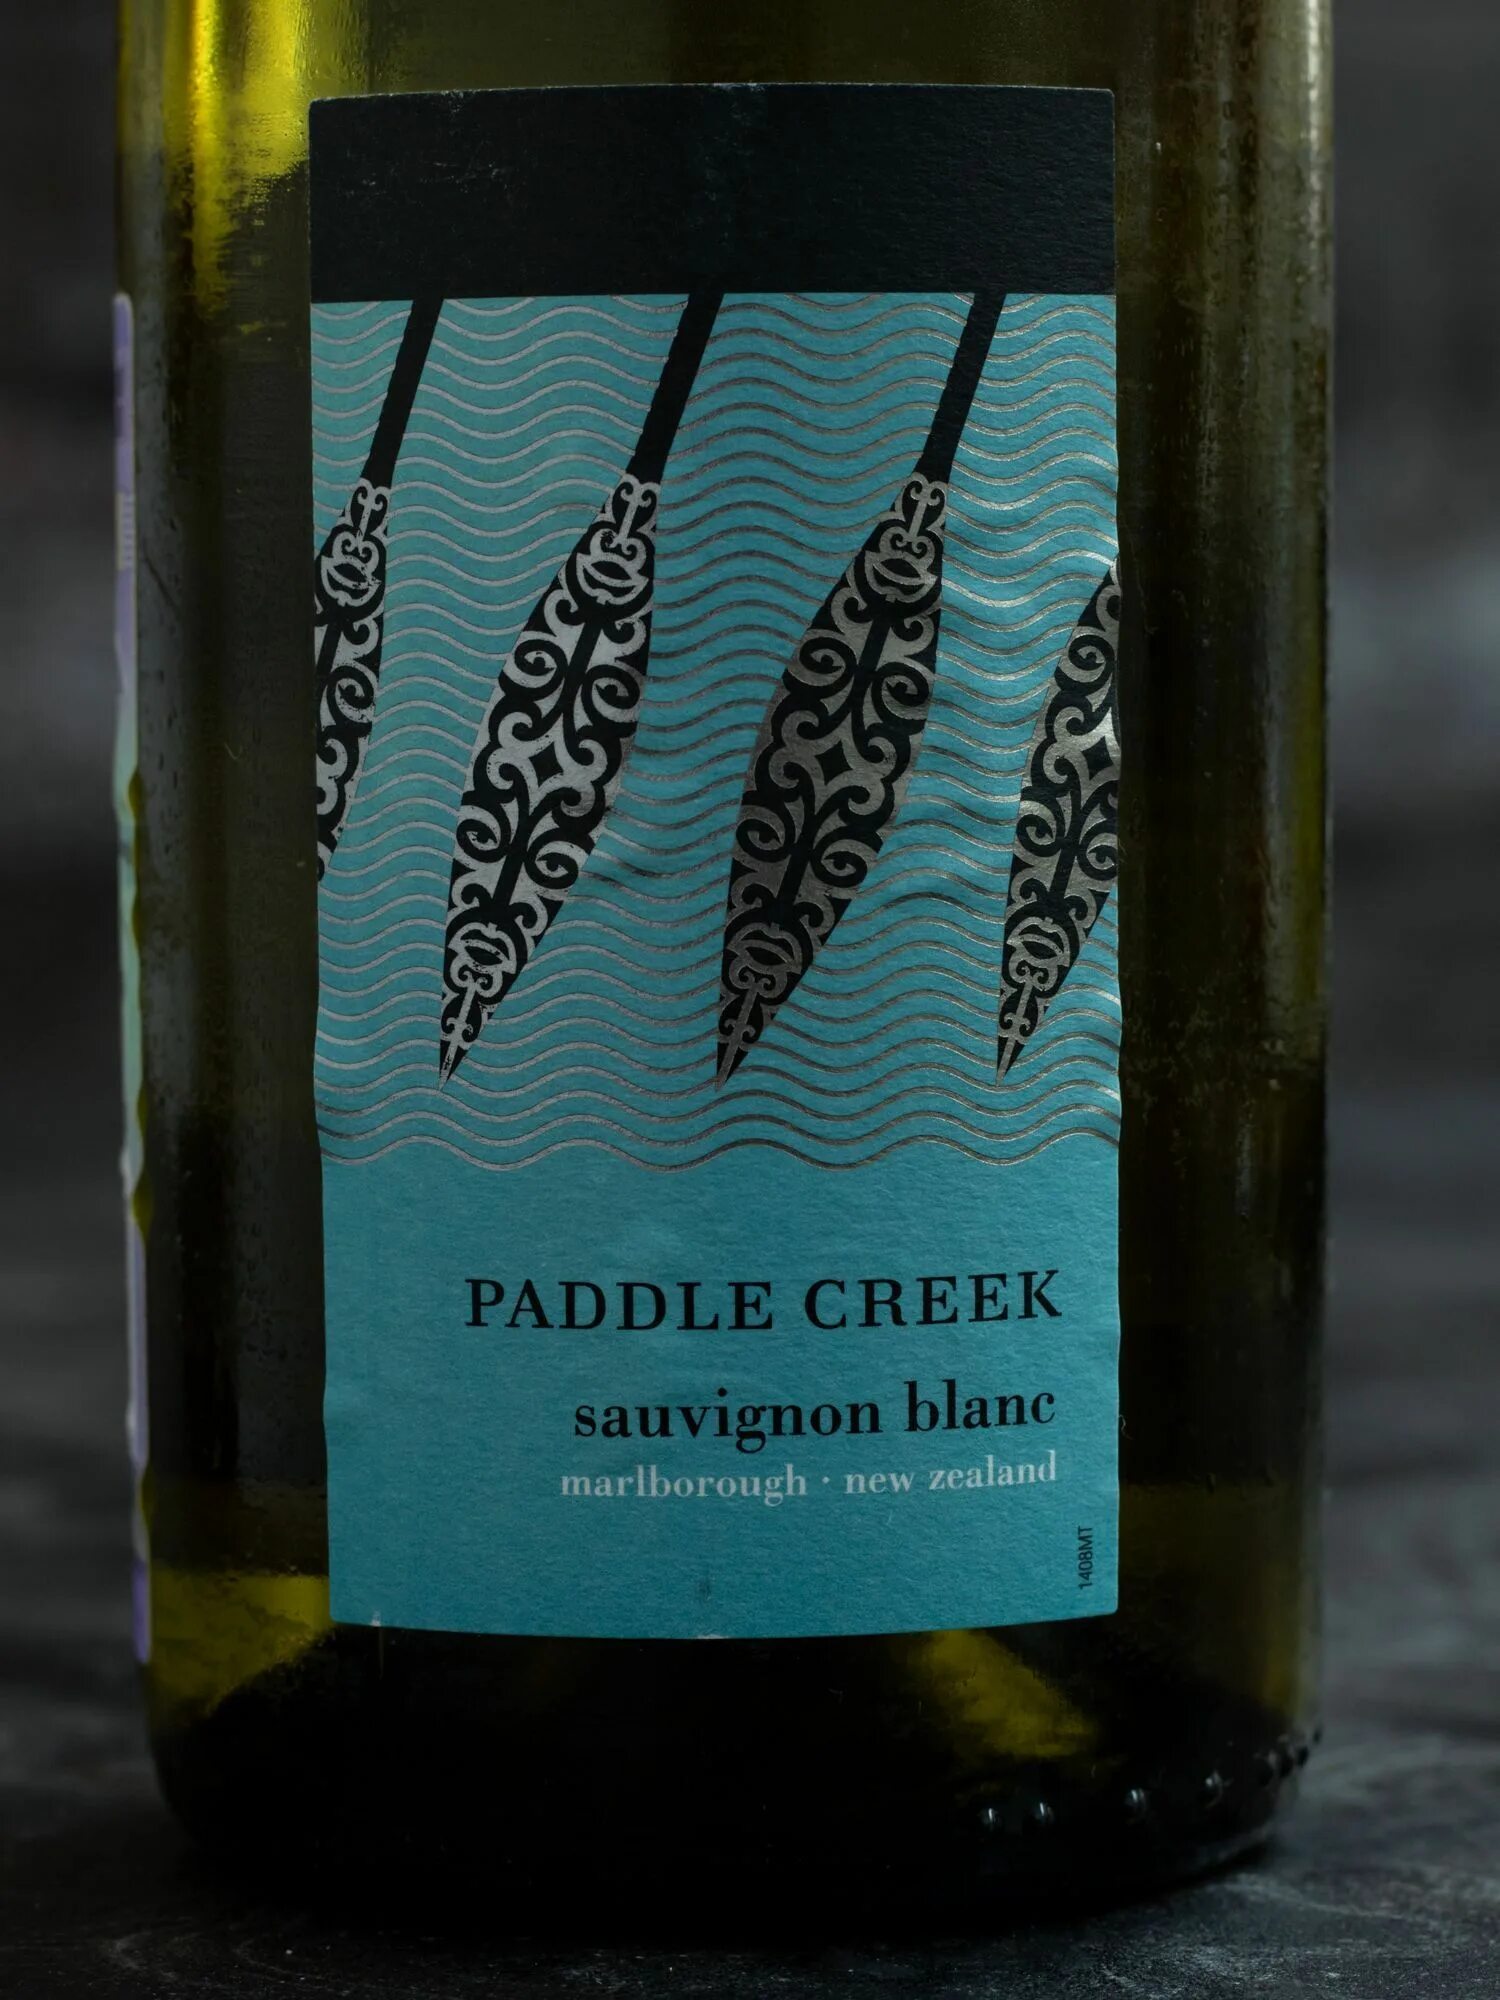 Паддл крик. Paddle Creek Sauvignon Blanc (новая Зеландия, Мальборо). Паддл крик Совиньон Блан. Paddle Creek Sauvignon Blanc. Вино паддл крик Совиньон Блан.